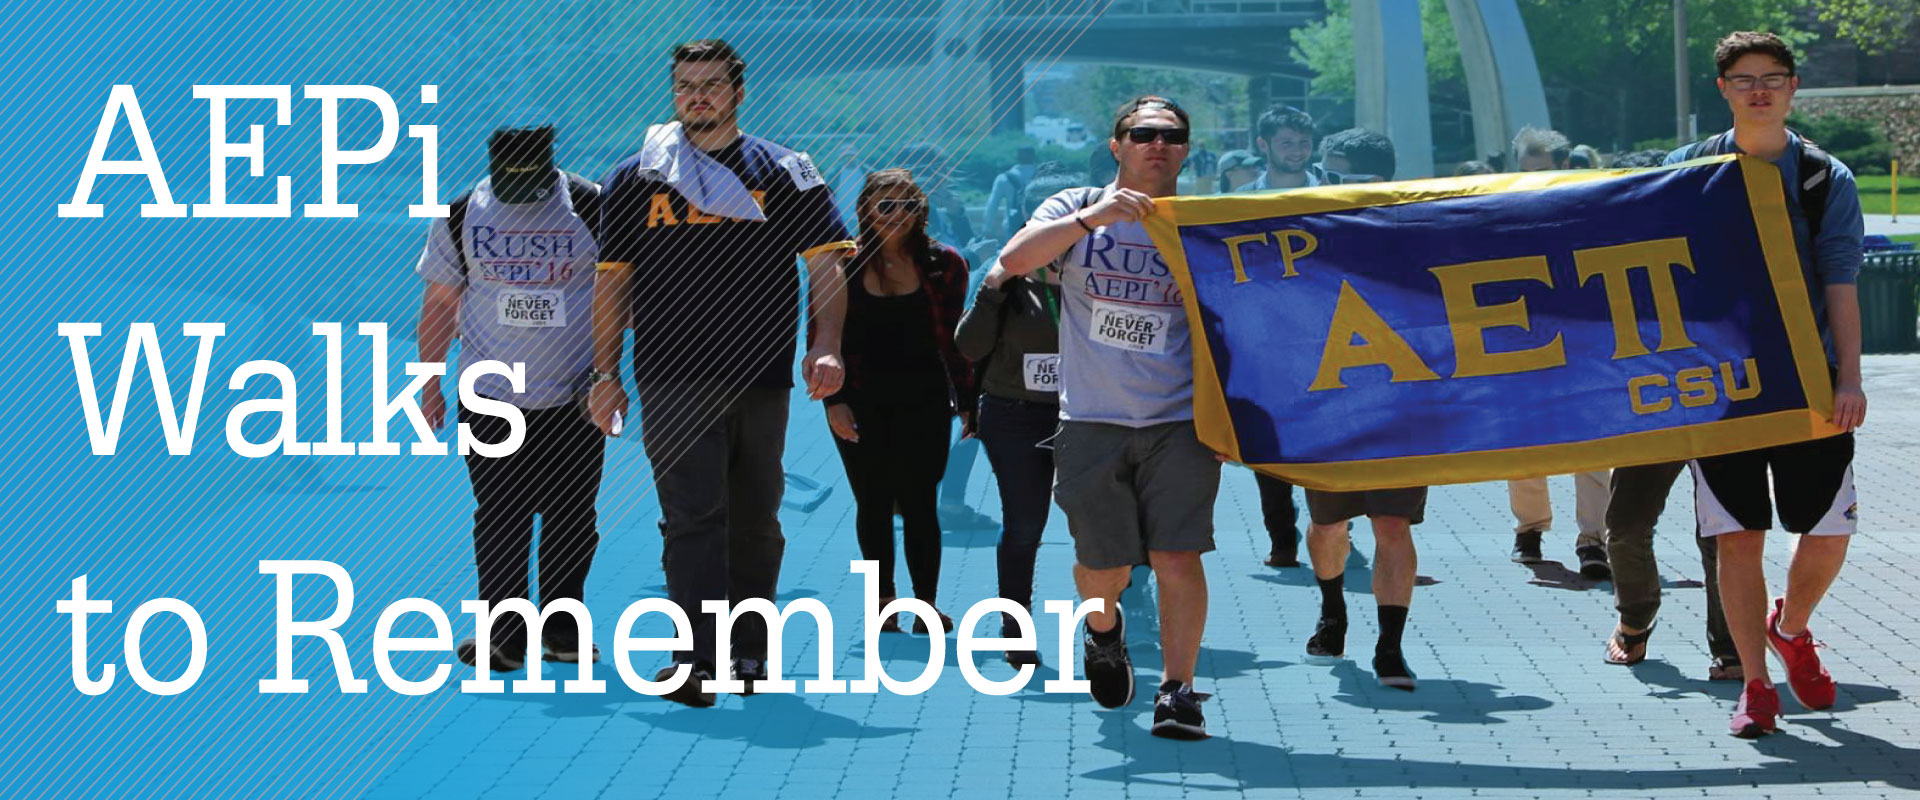 We Walk to Remember CSU AEPi